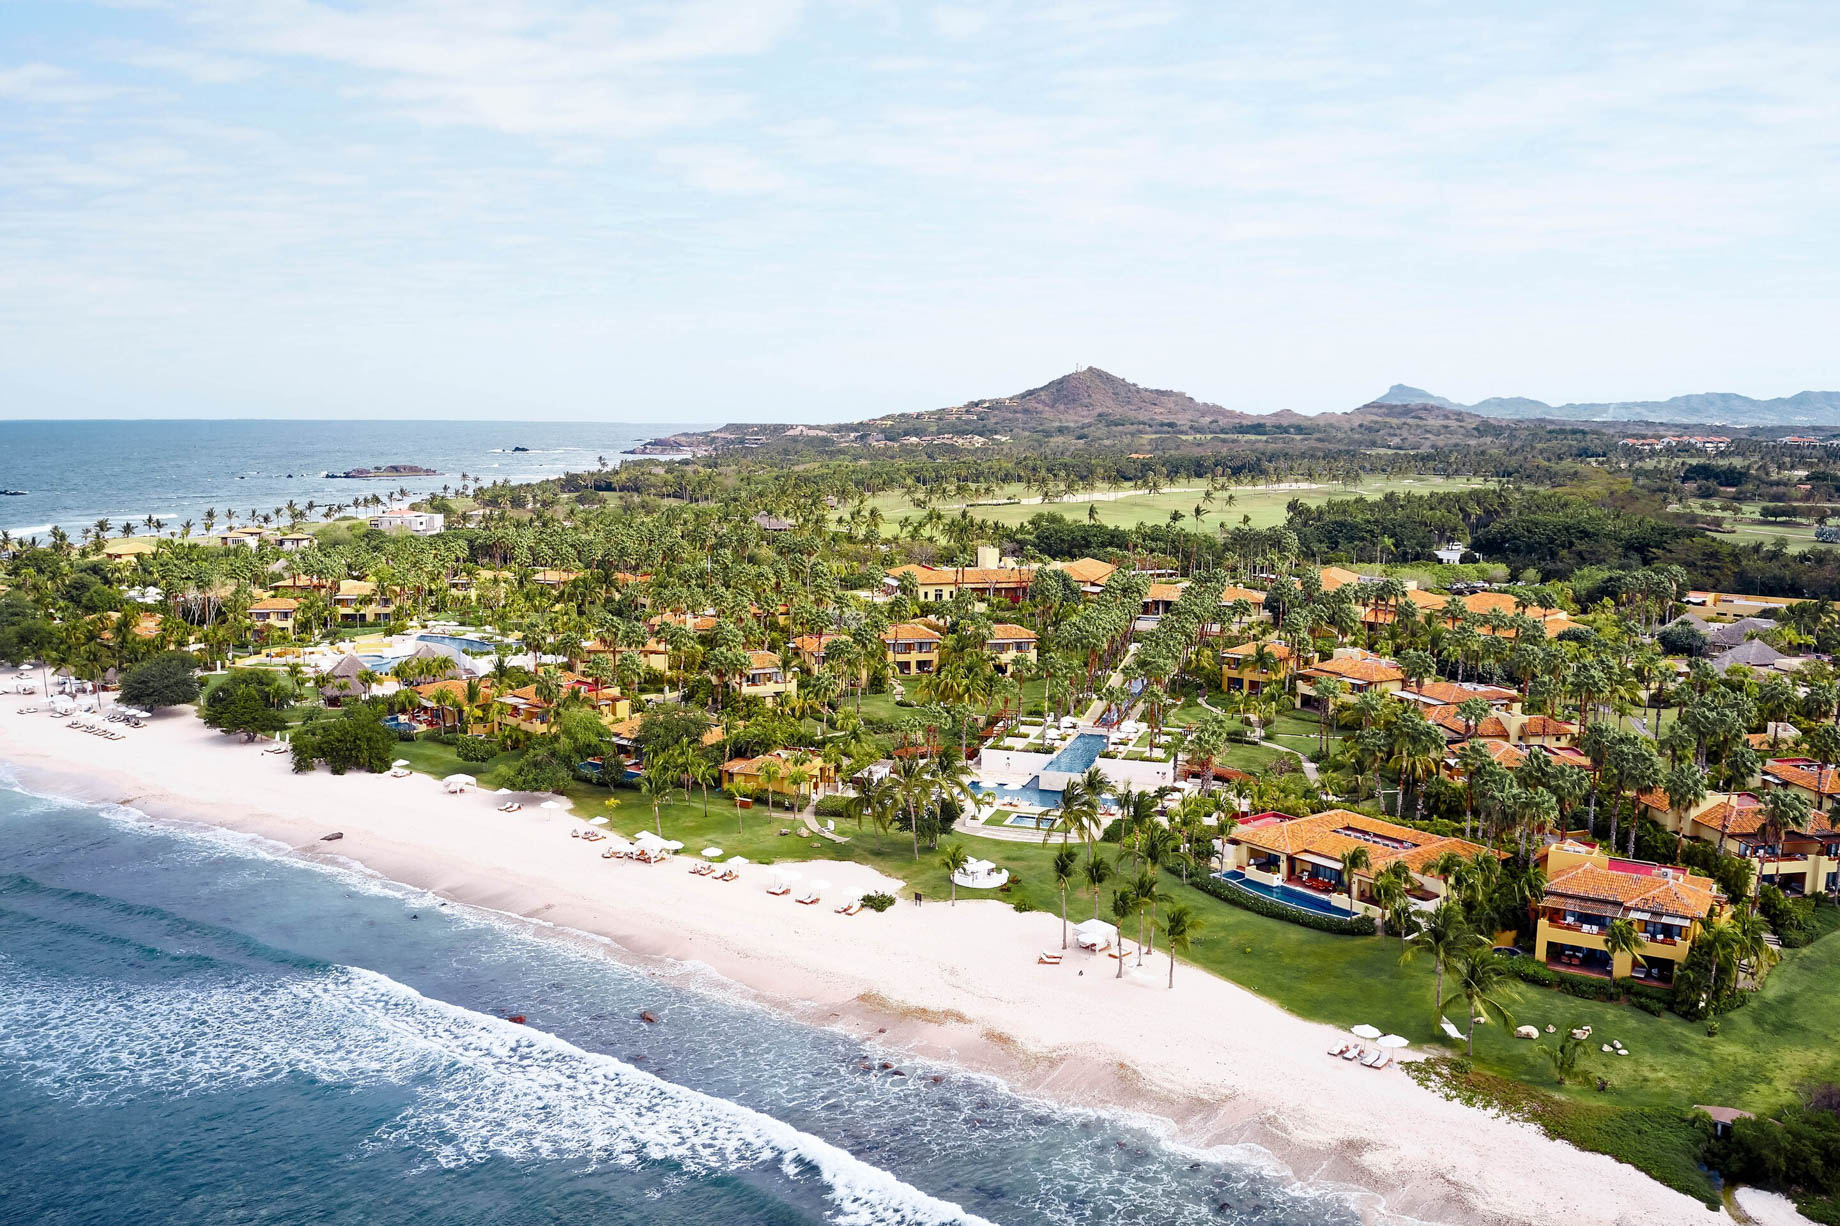 The St. Regis Punta Mita Resort – Nayarit, Mexico – Resort Aerial View